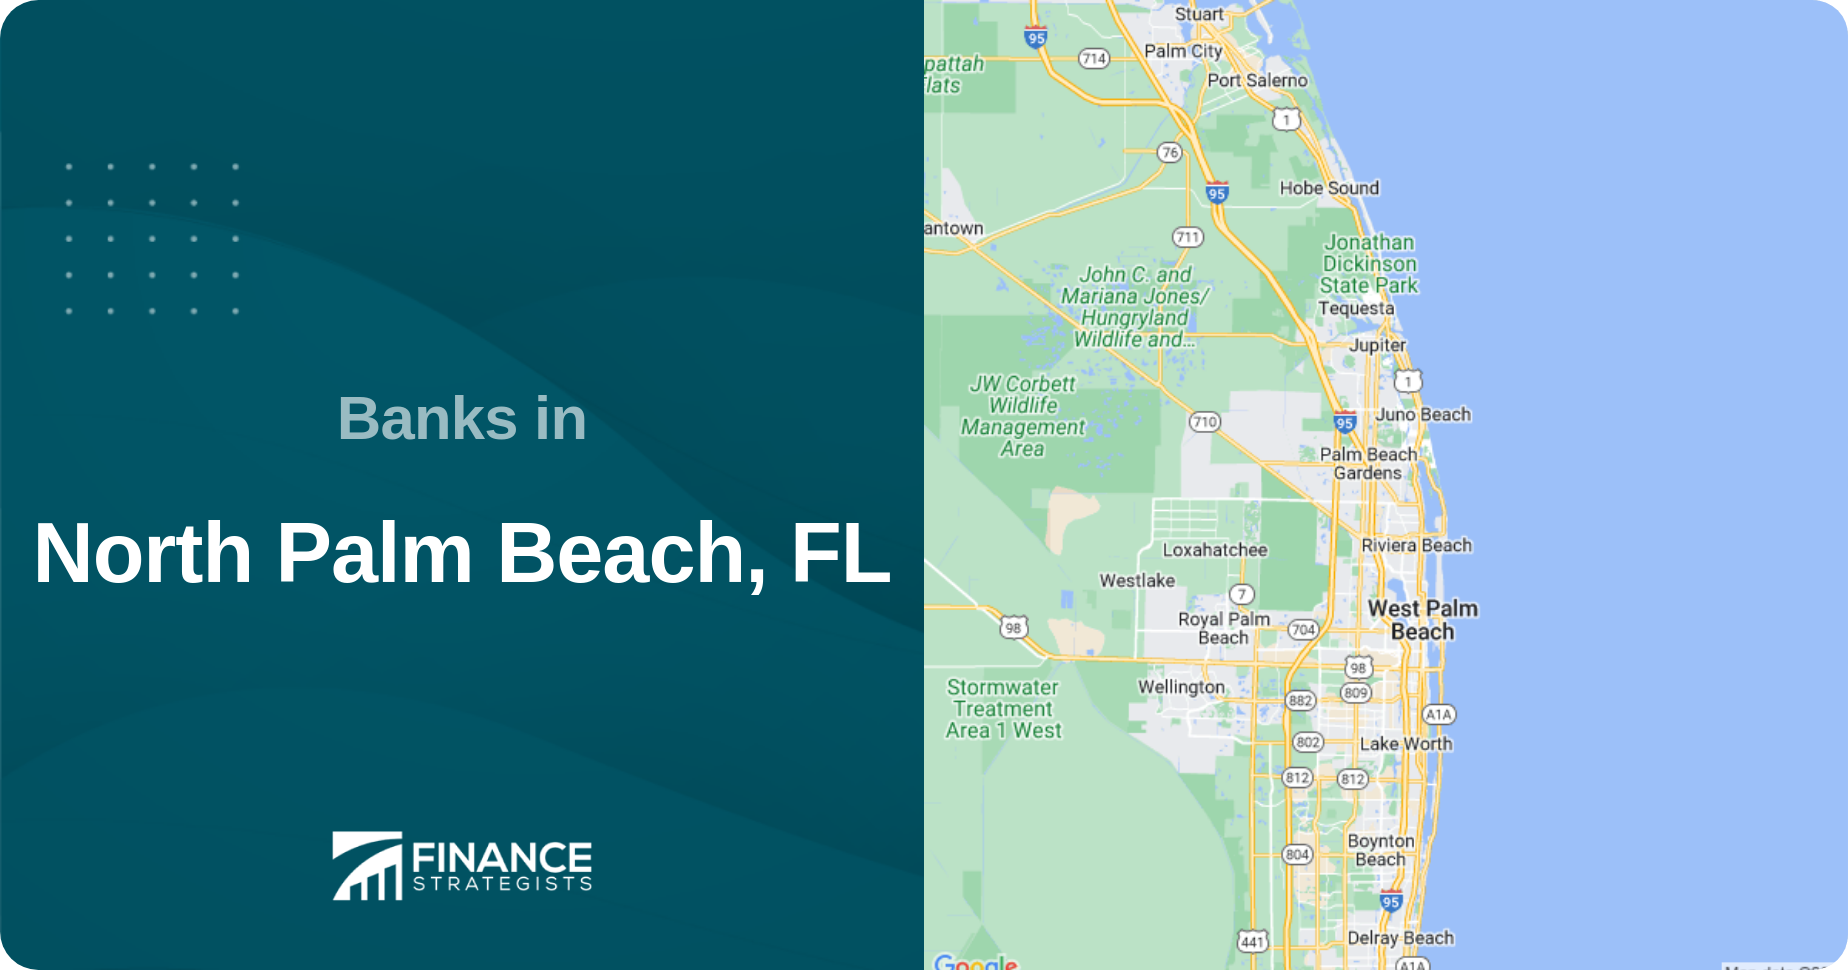 Banks in North Palm Beach, FL